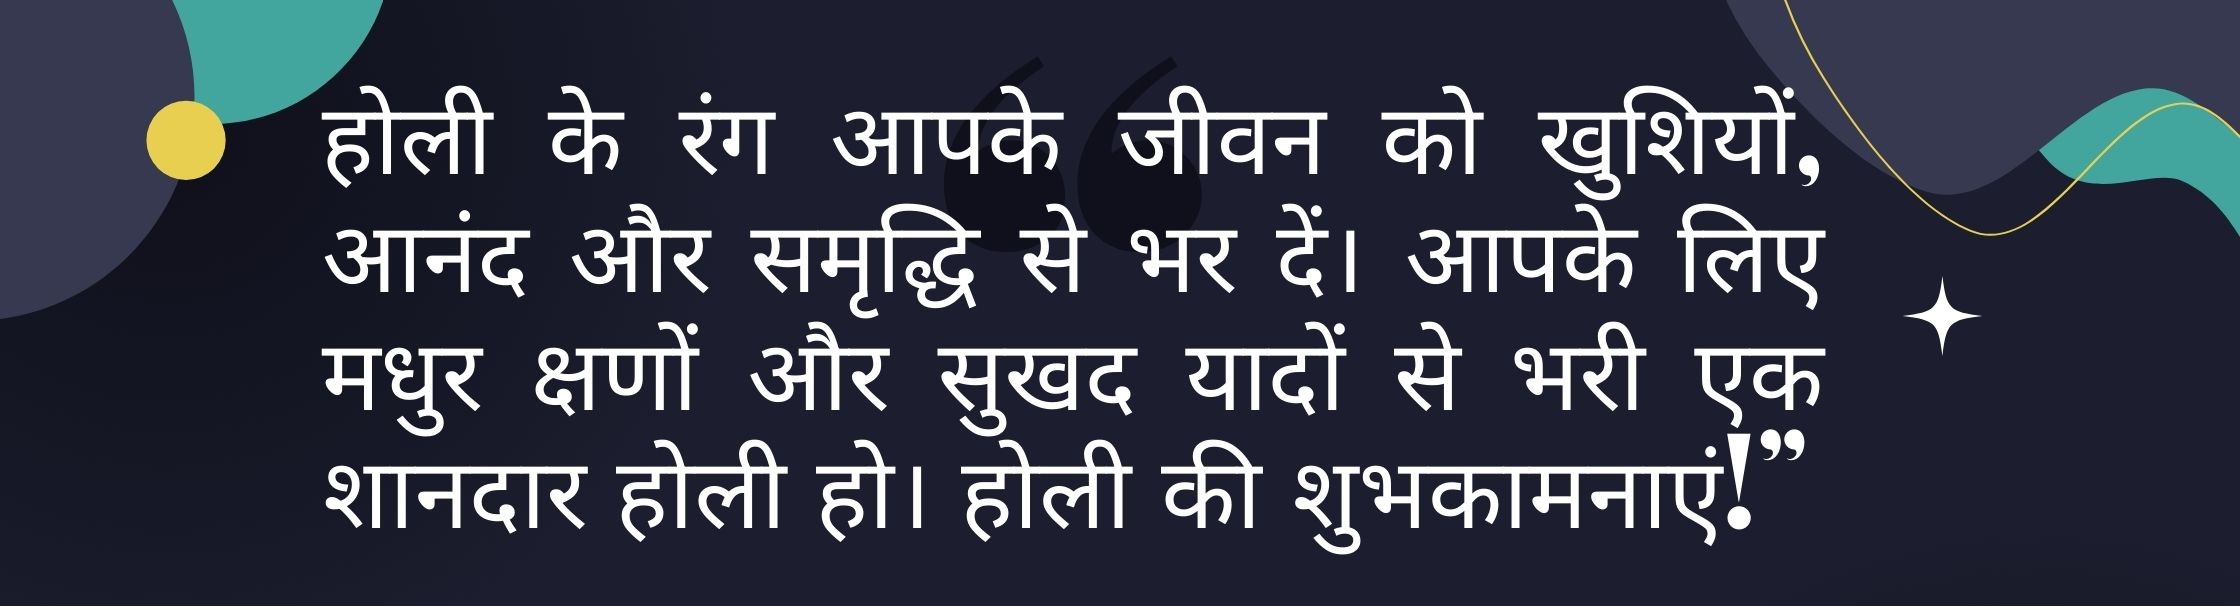 Happy Holi Quotes in Hindi